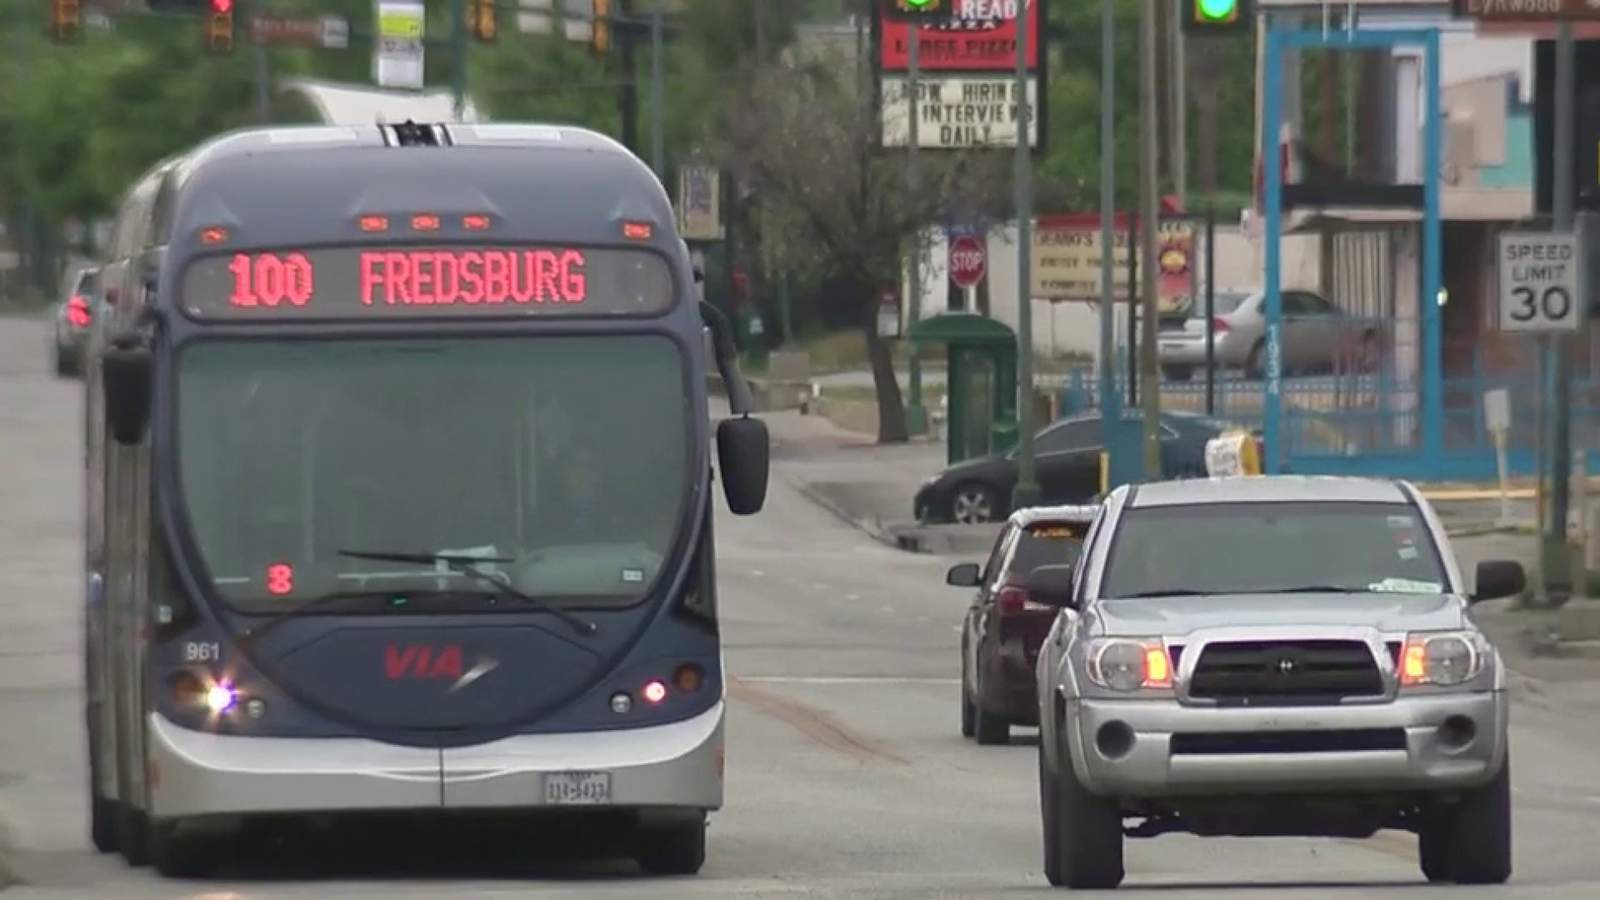 Public transit, road improvements among infrastructure priorities in San Antonio region